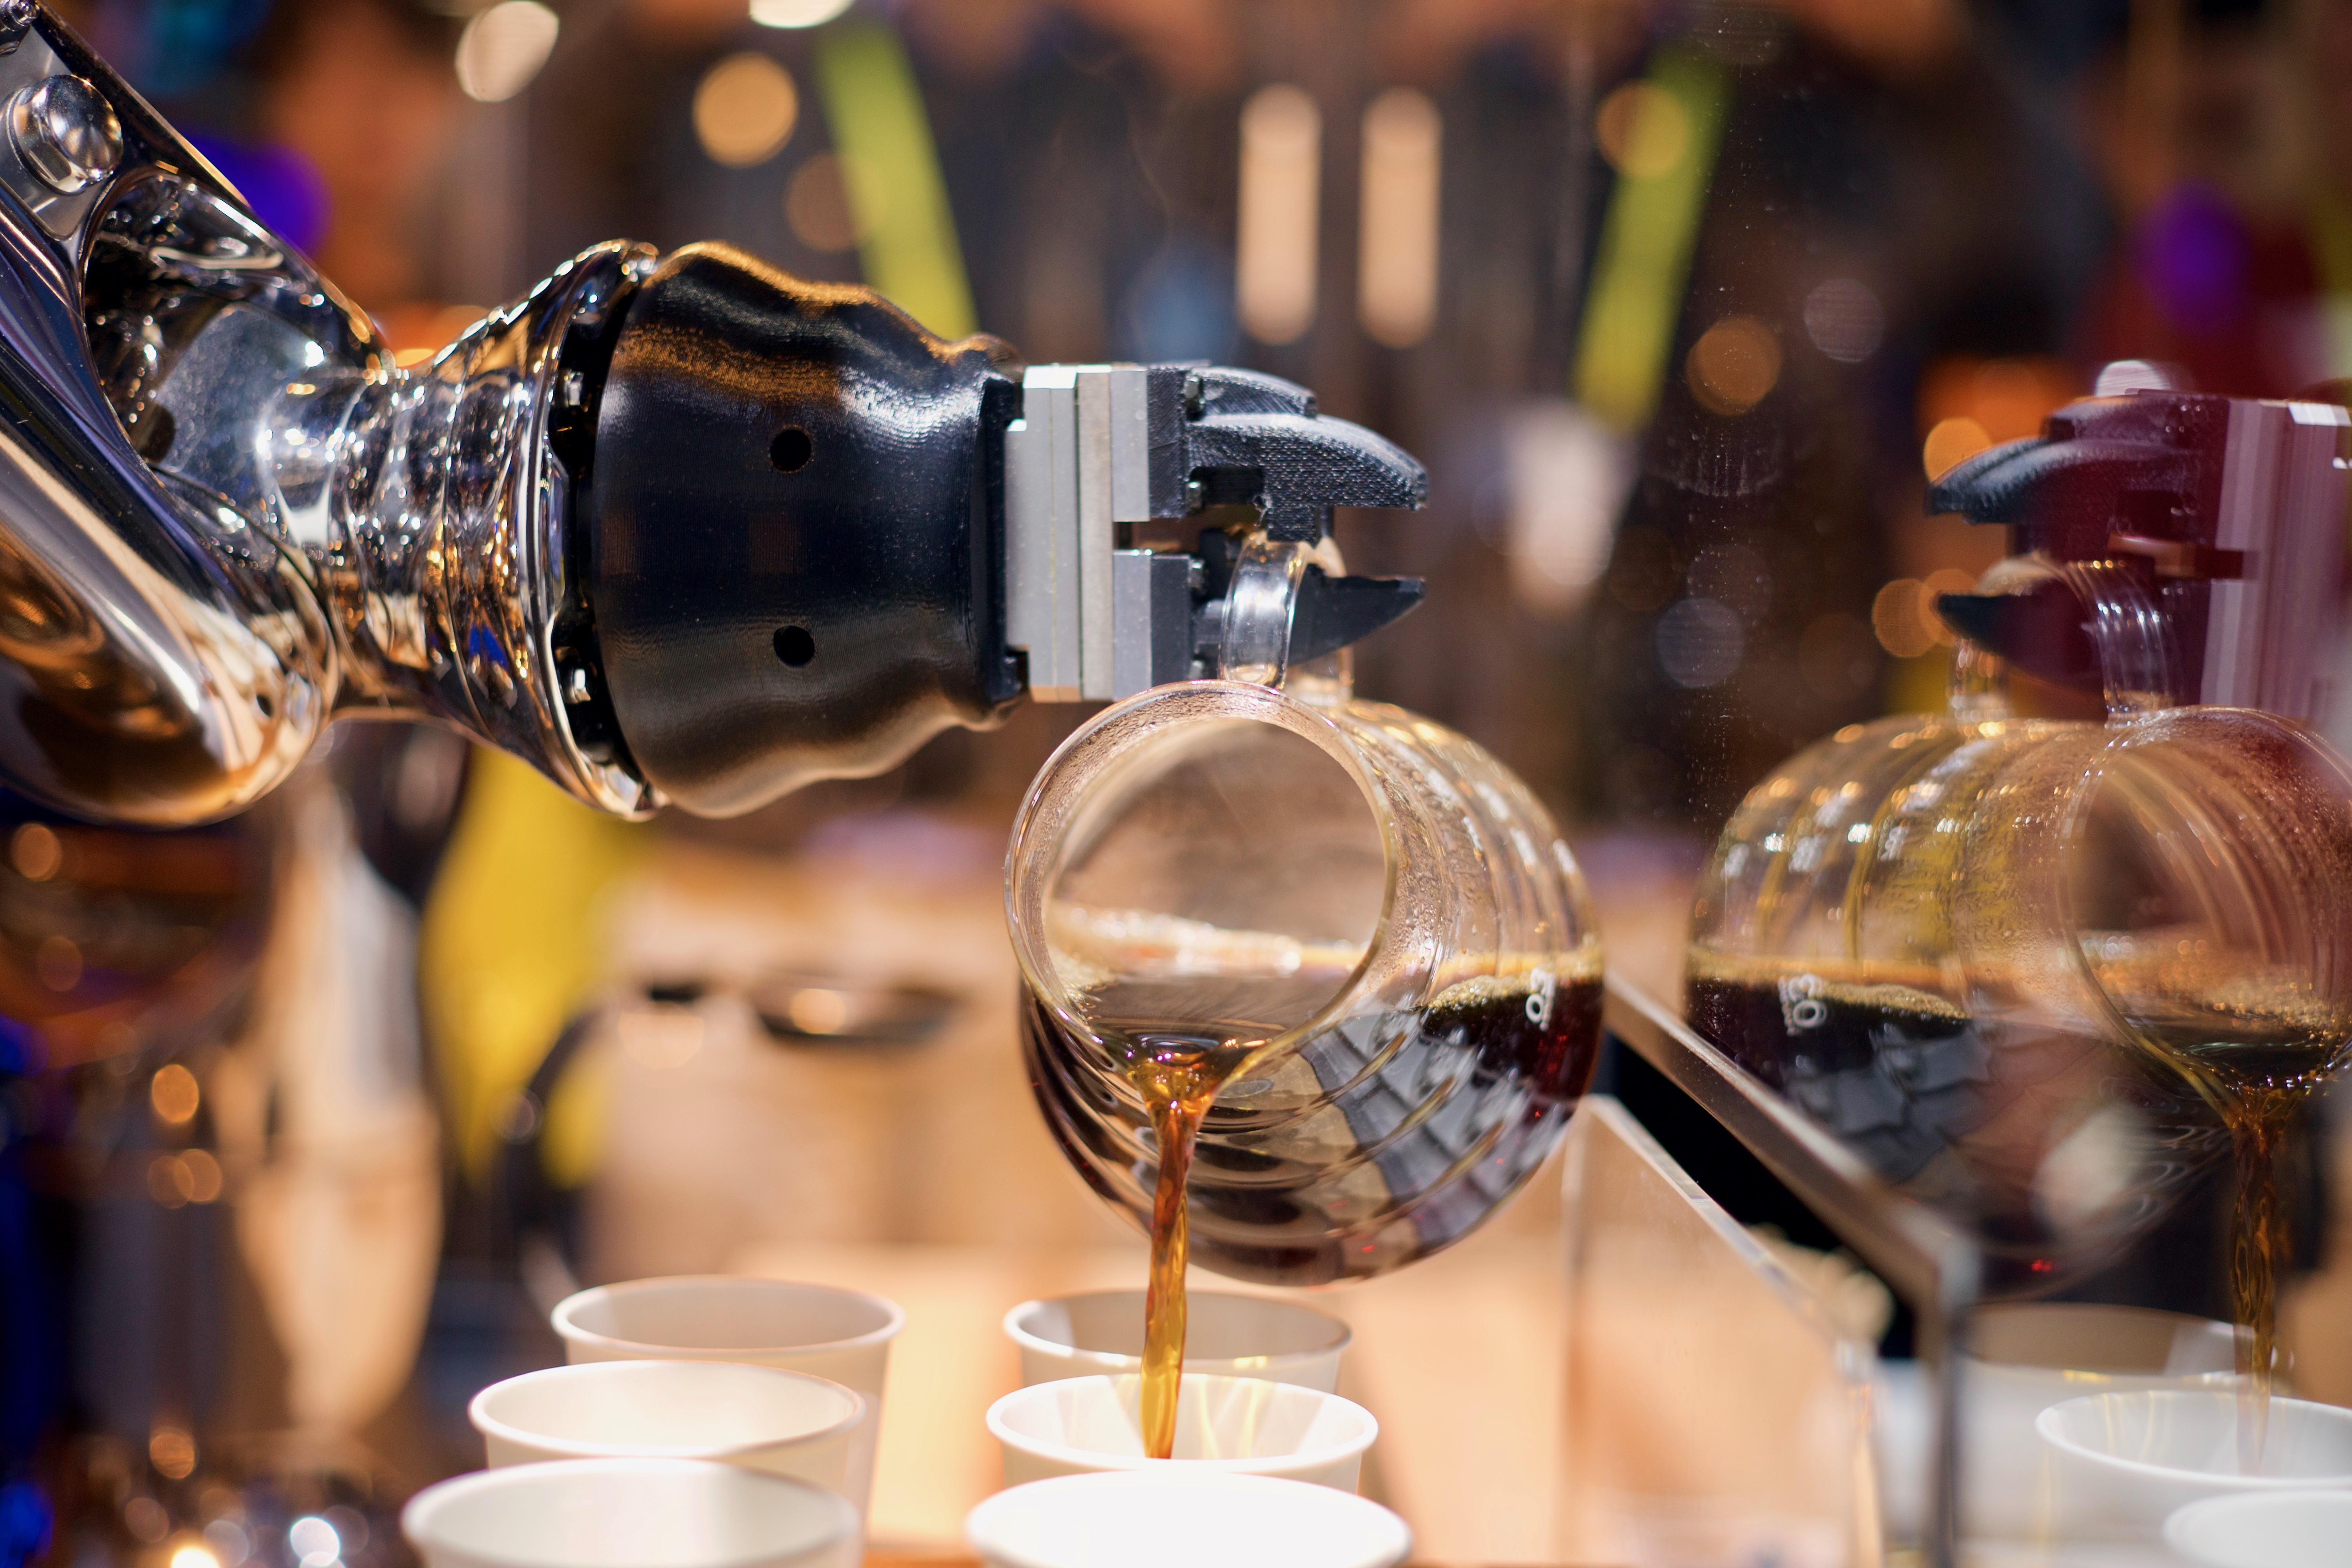 denso-coffee-robot-ces-2017-1.jpg